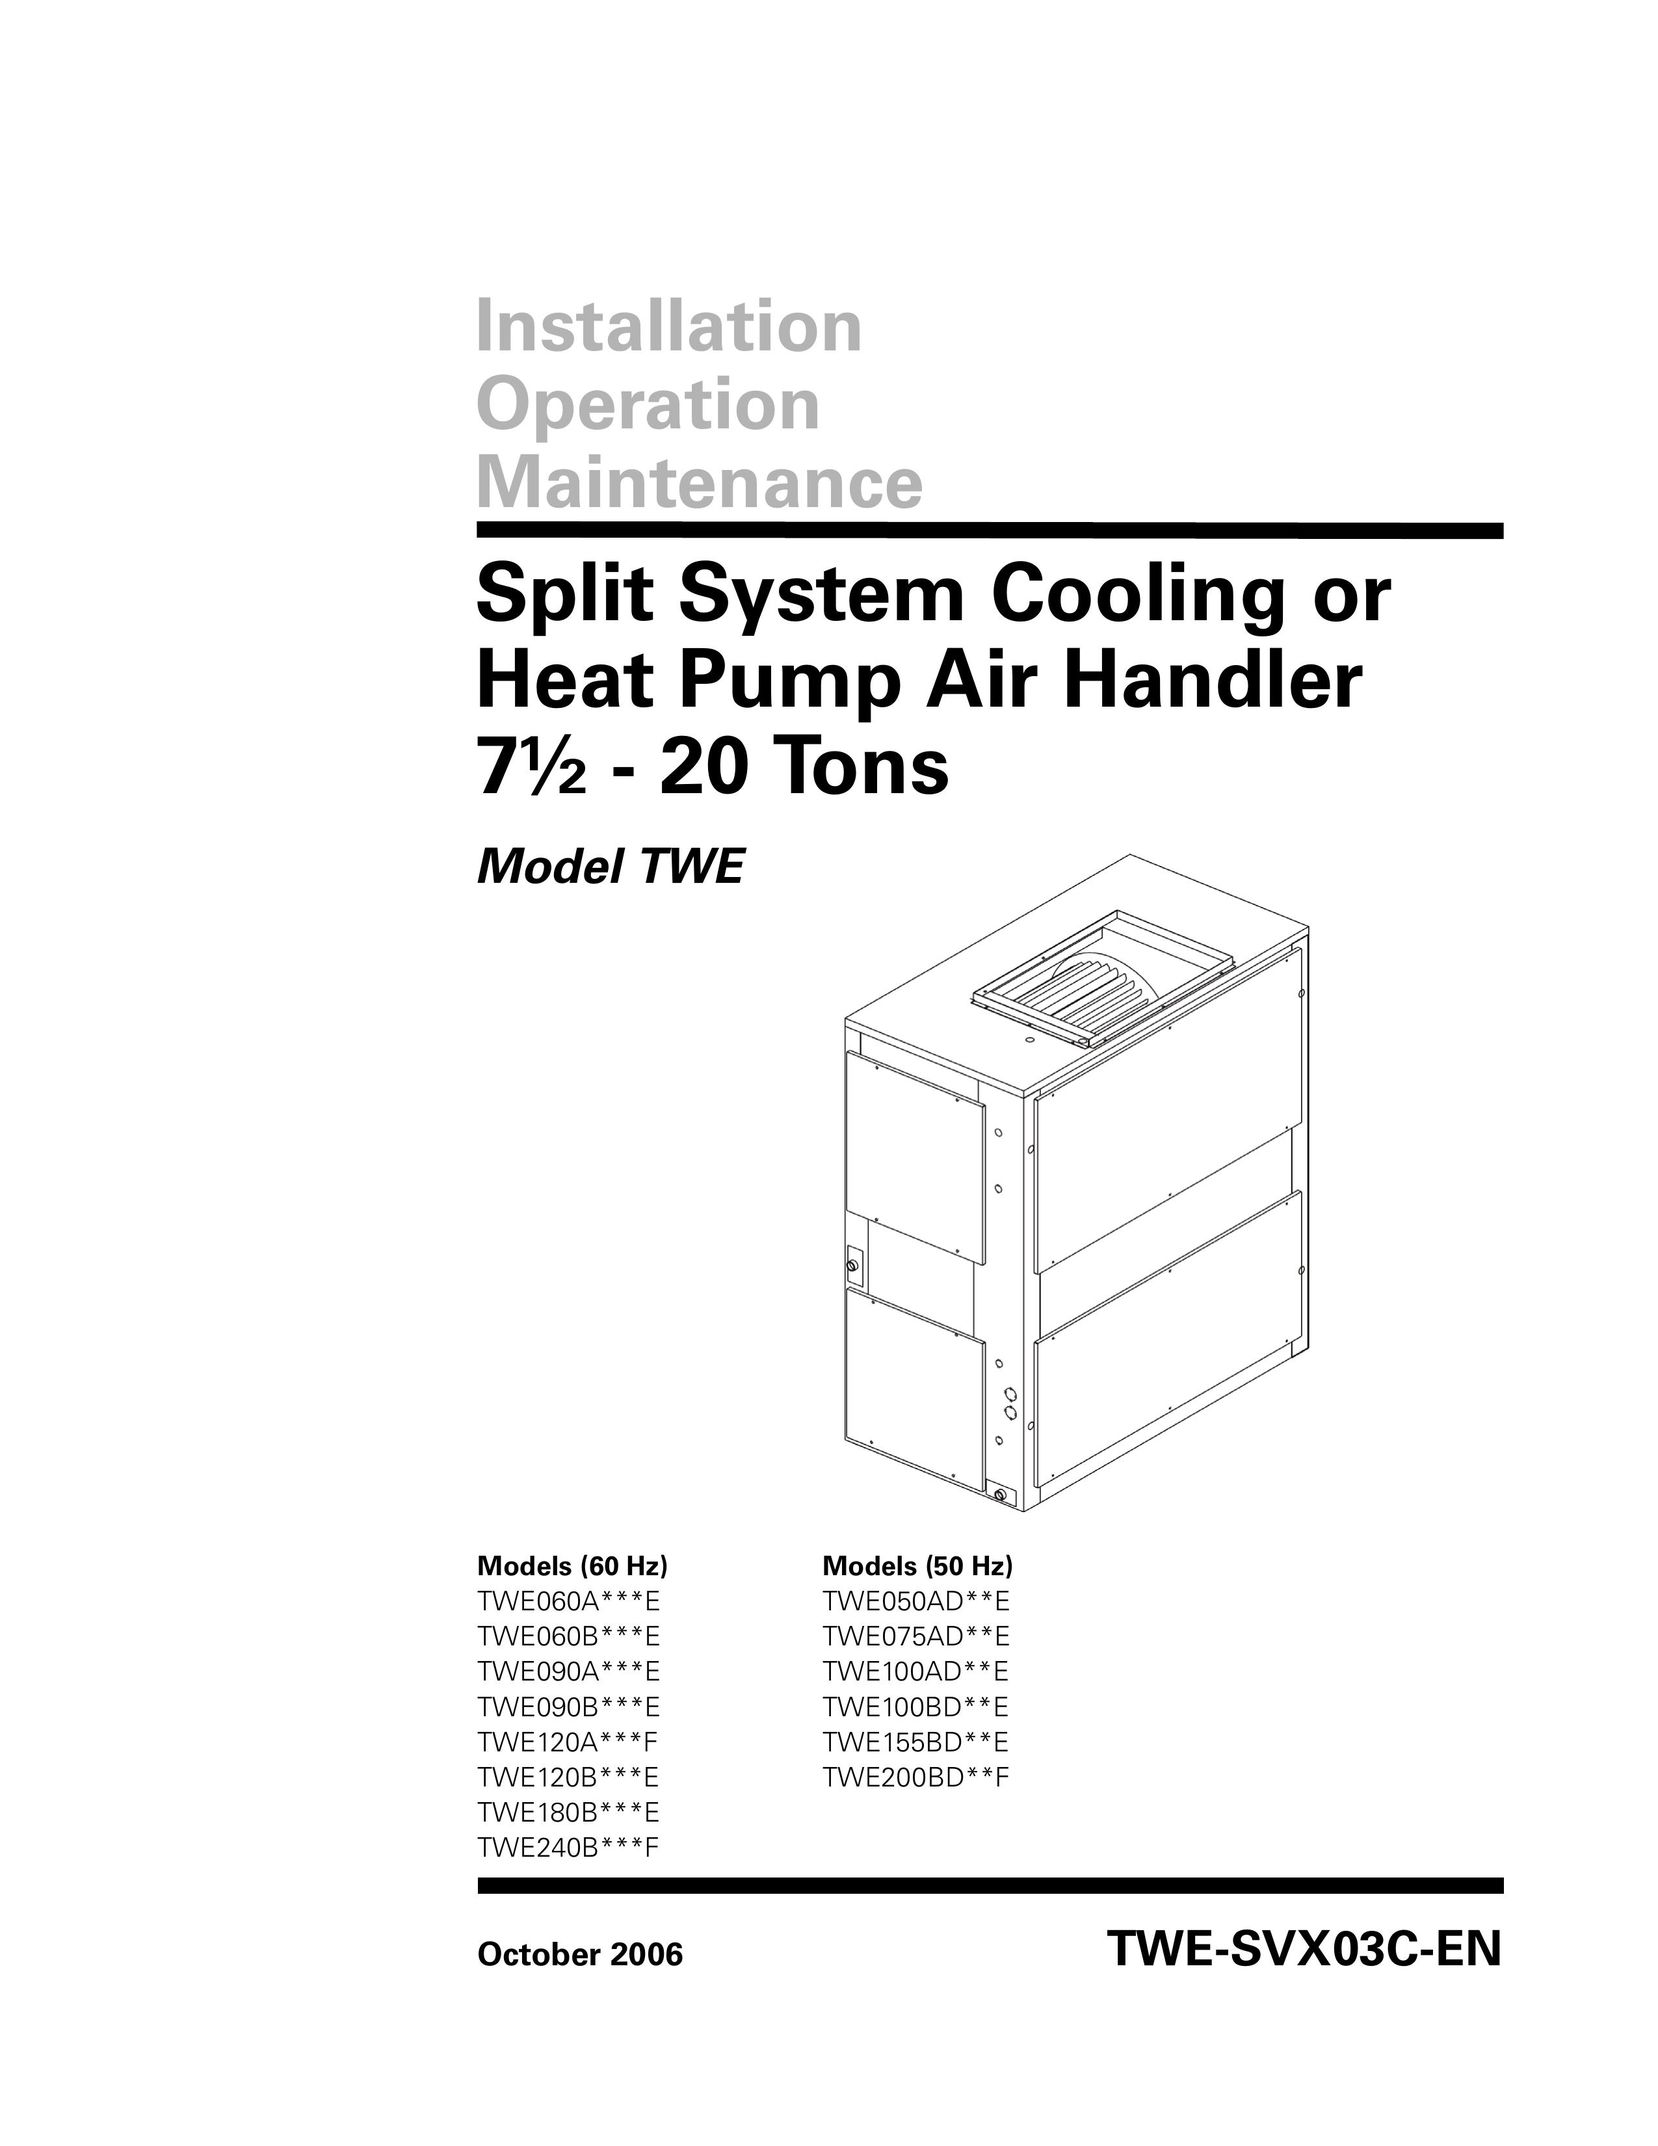 American Standard TWE075AD**E Heat Pump User Manual